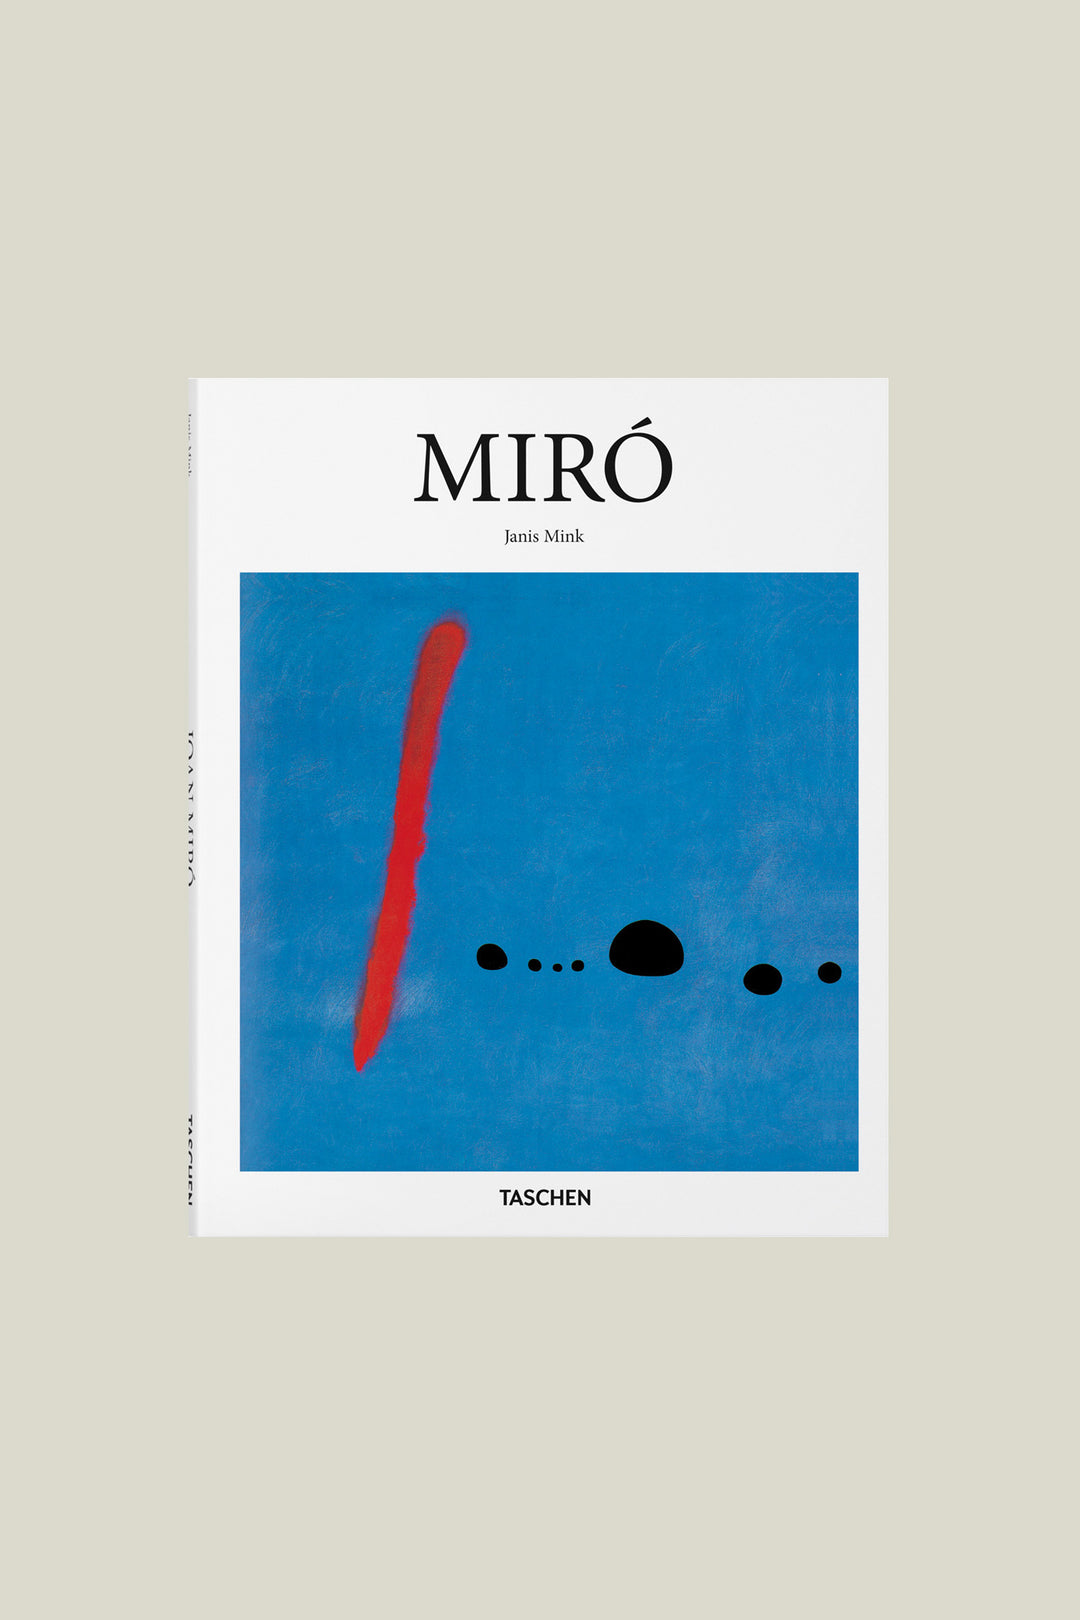 Joan Miró - Modernist legend